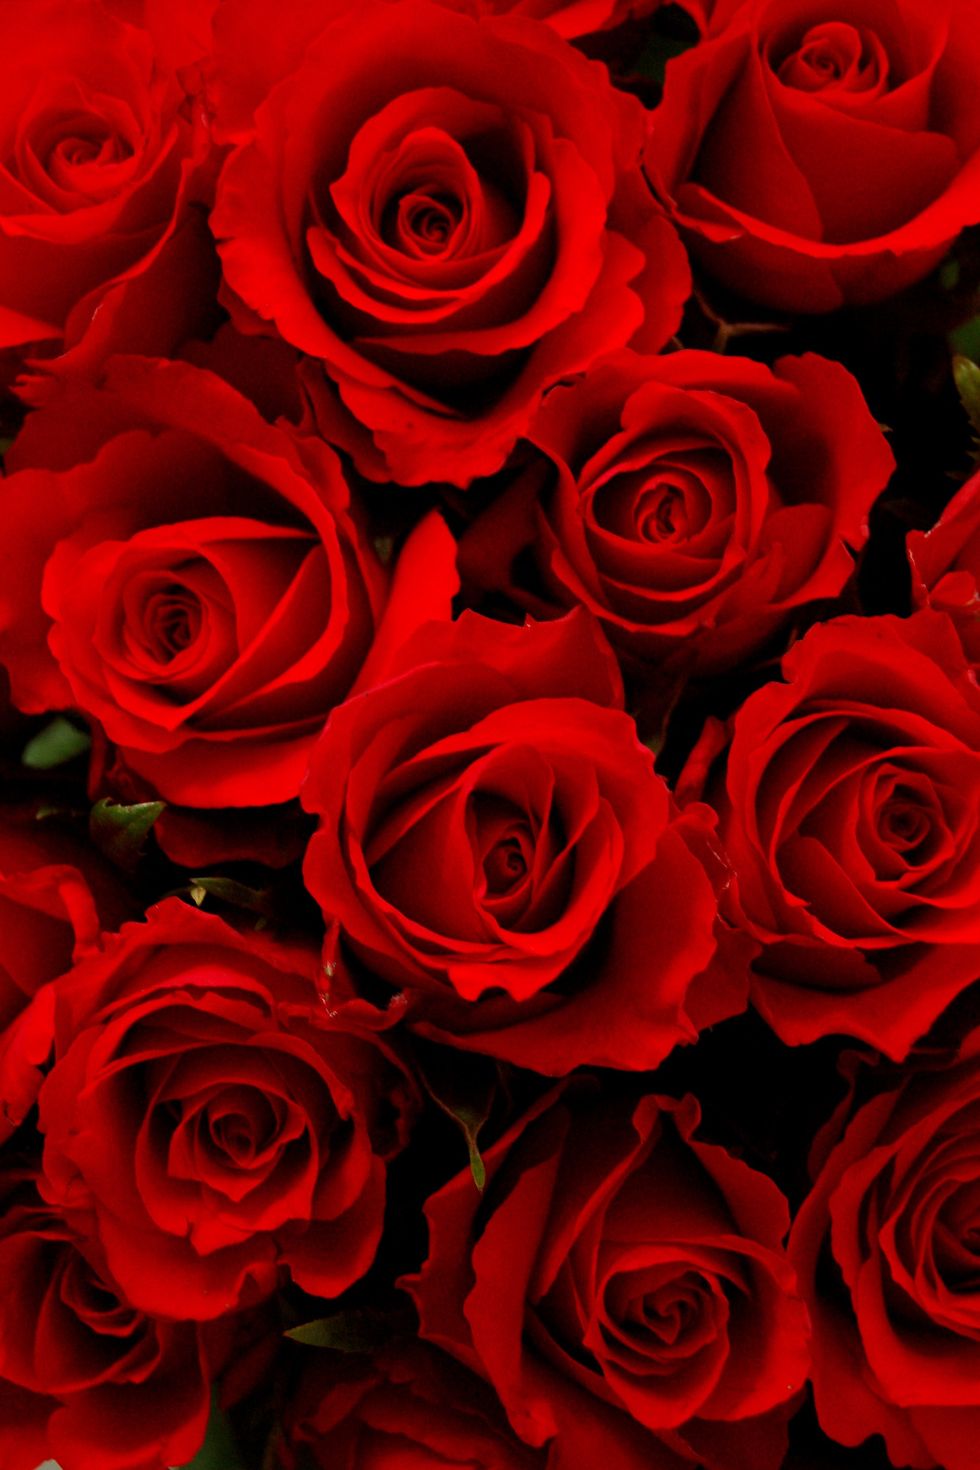 Petal, Flower, Red, Flowering plant, Rose family, Still life photography, Carmine, Rose order, Colorfulness, Rose, 